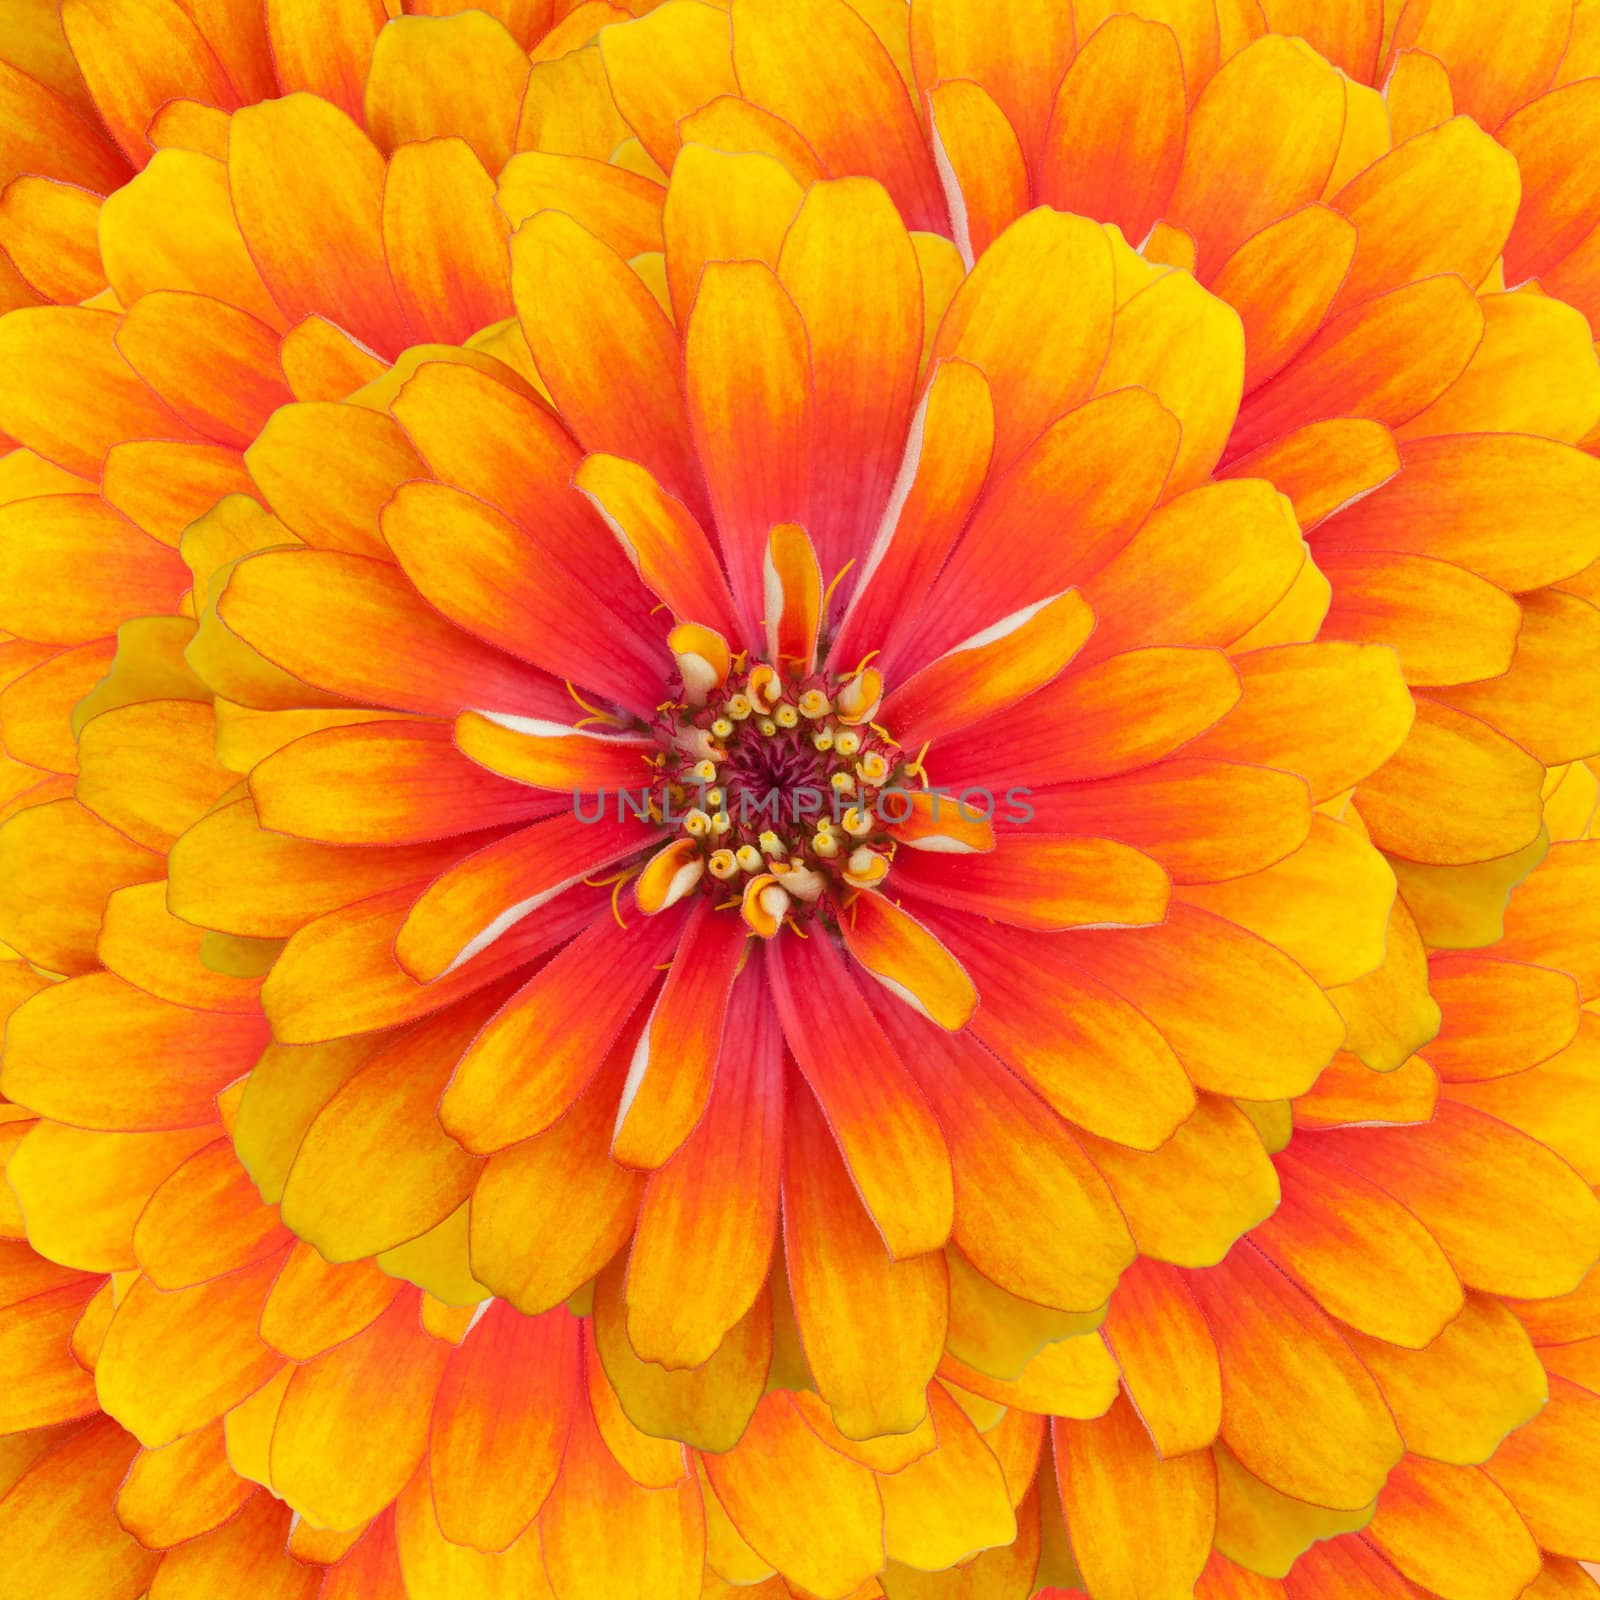 Zinnia flowers by foto76